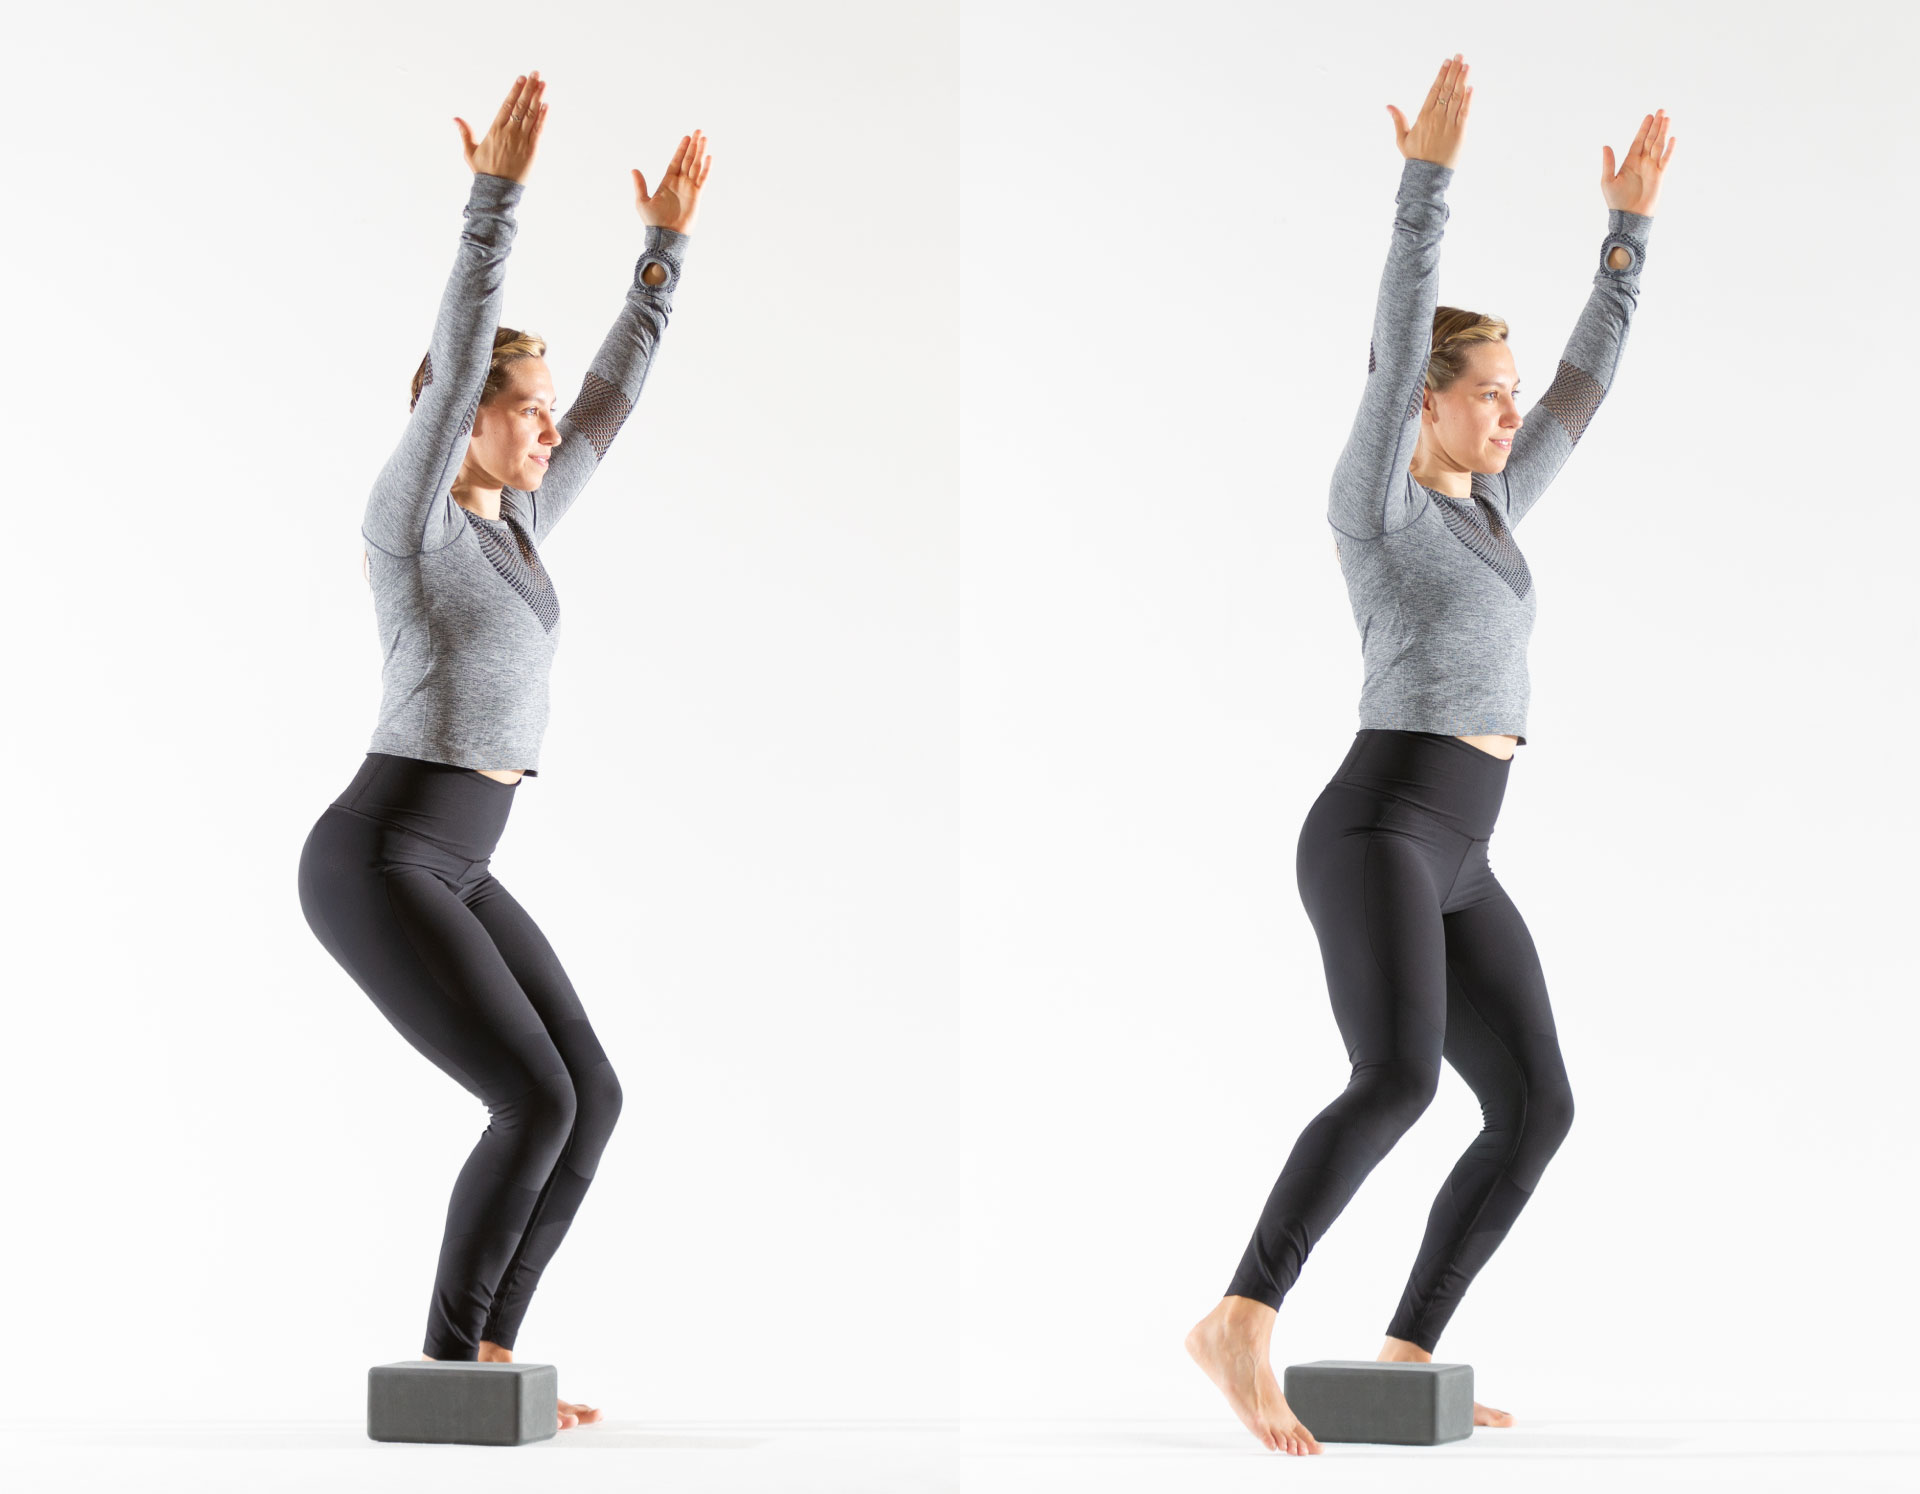 Beinks Yoga – Standing Yoga Poses